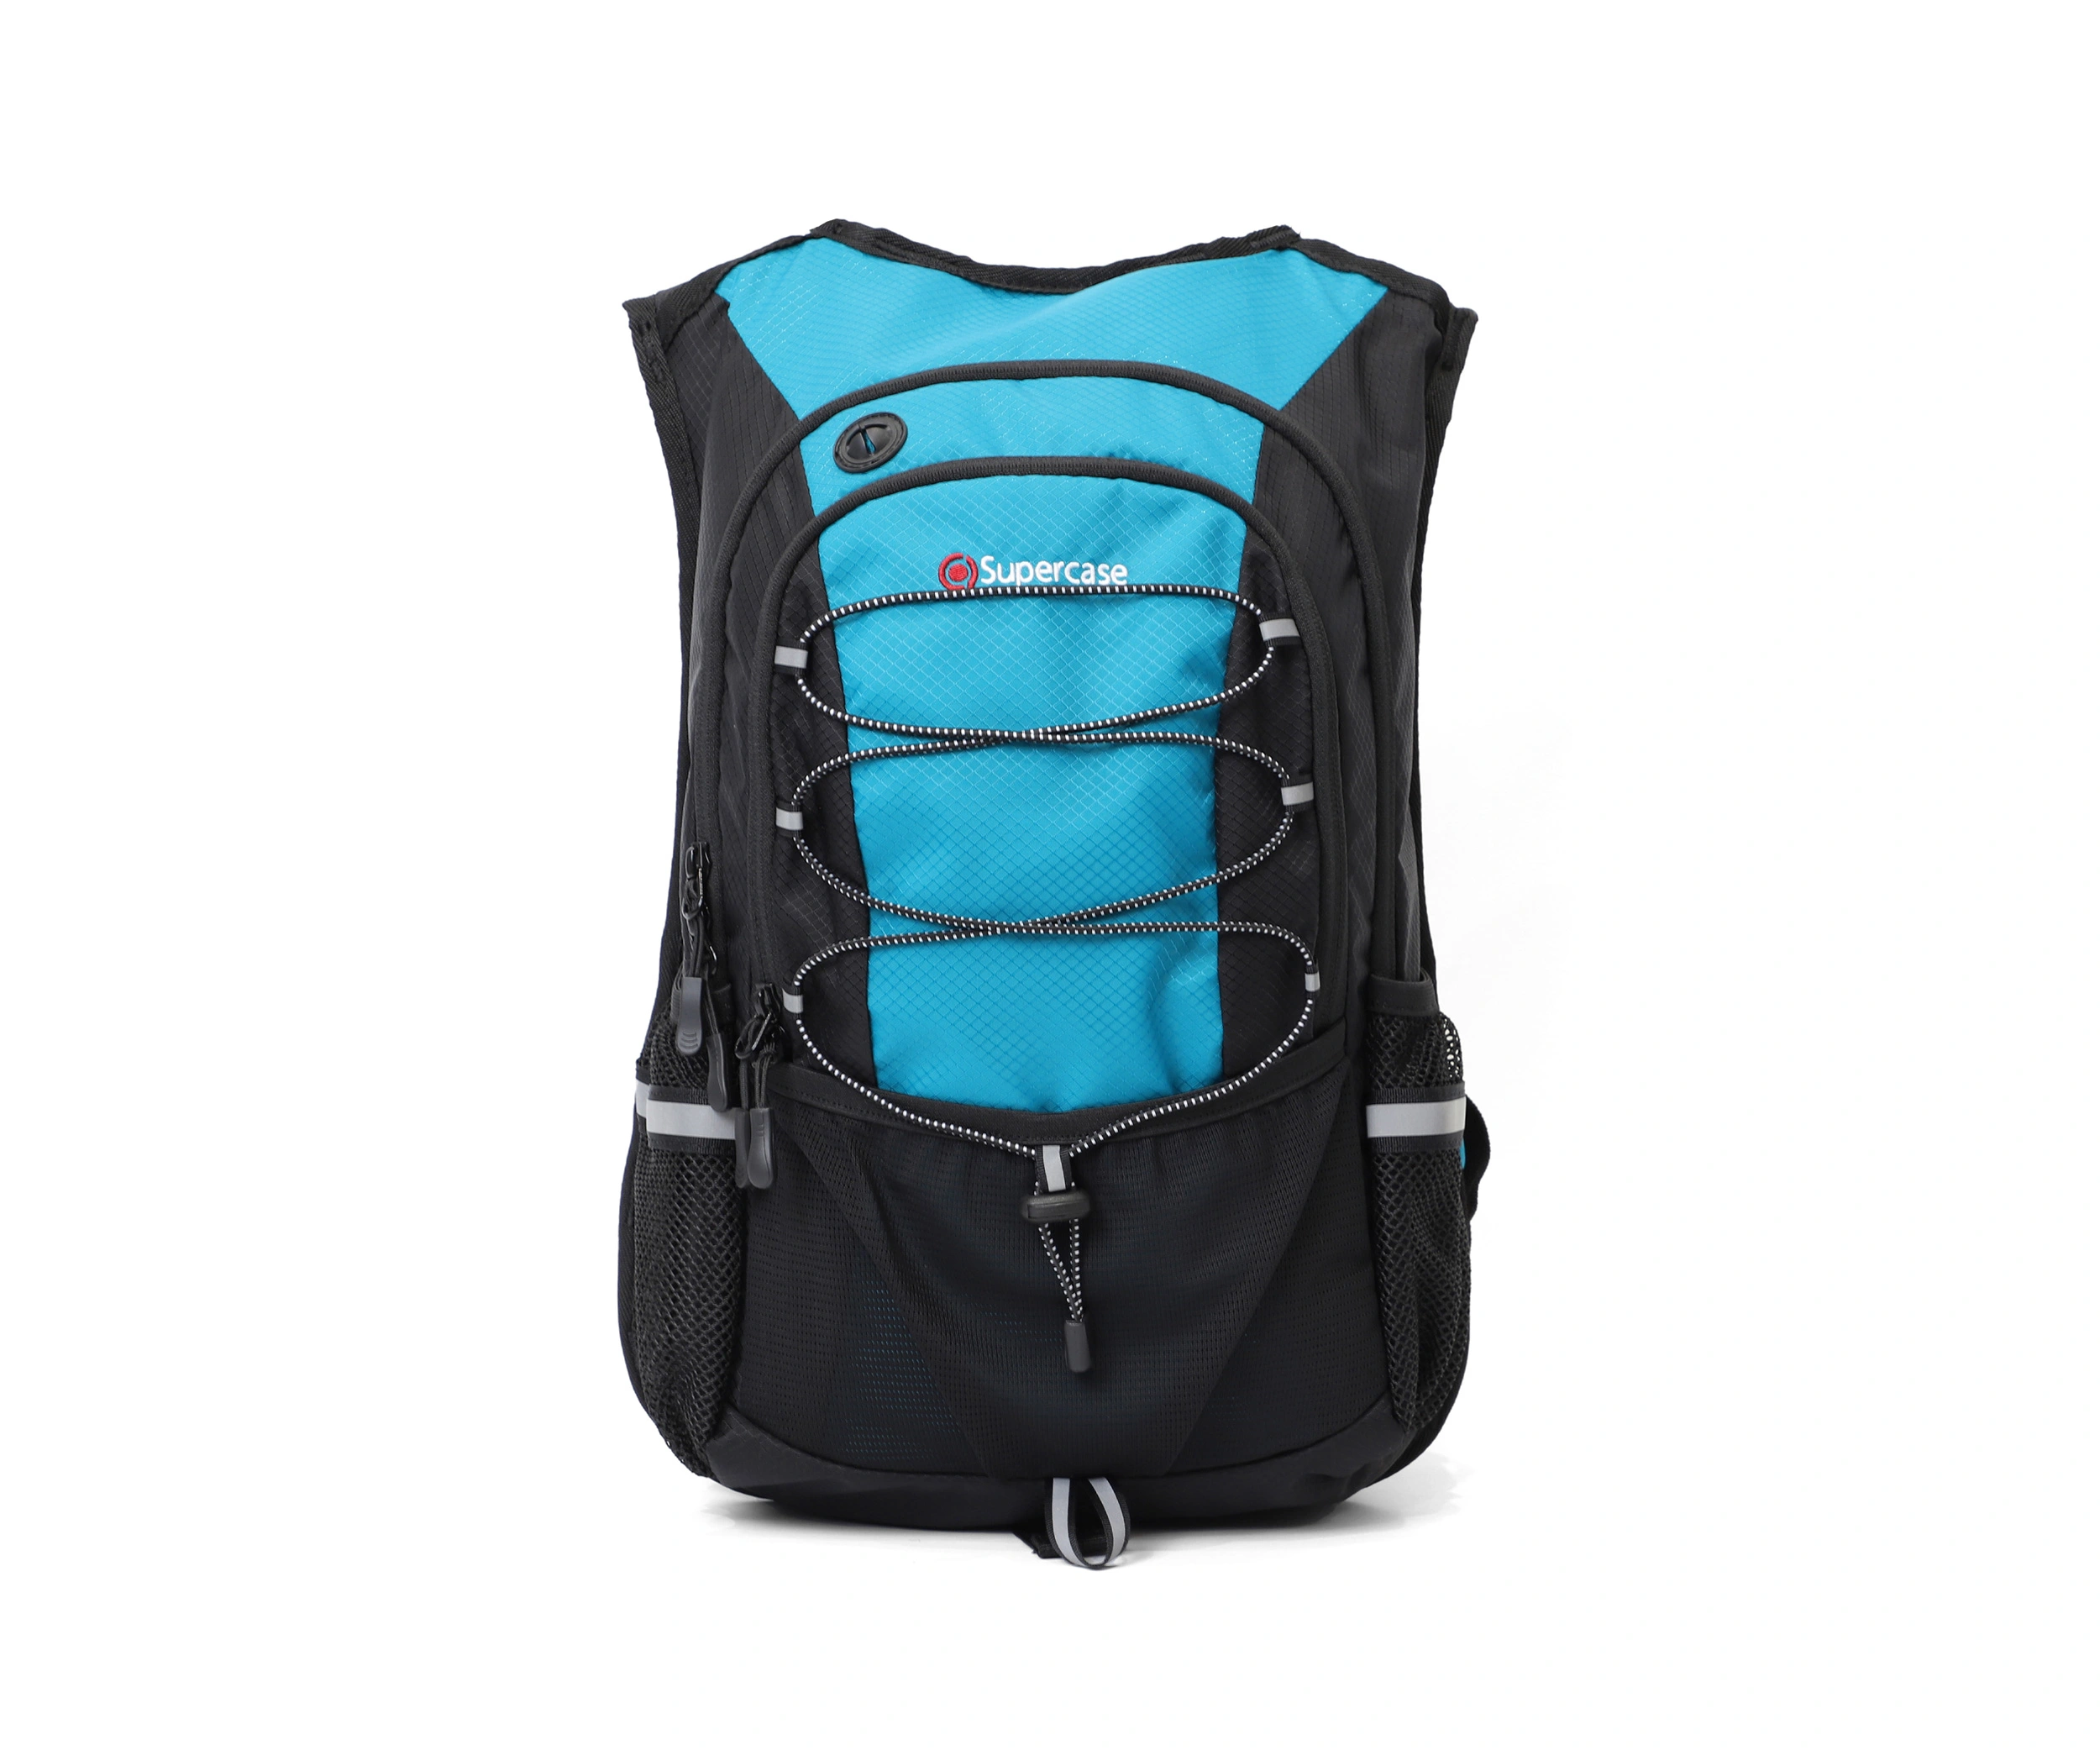 ReflectRide Tech Cycling Backpack